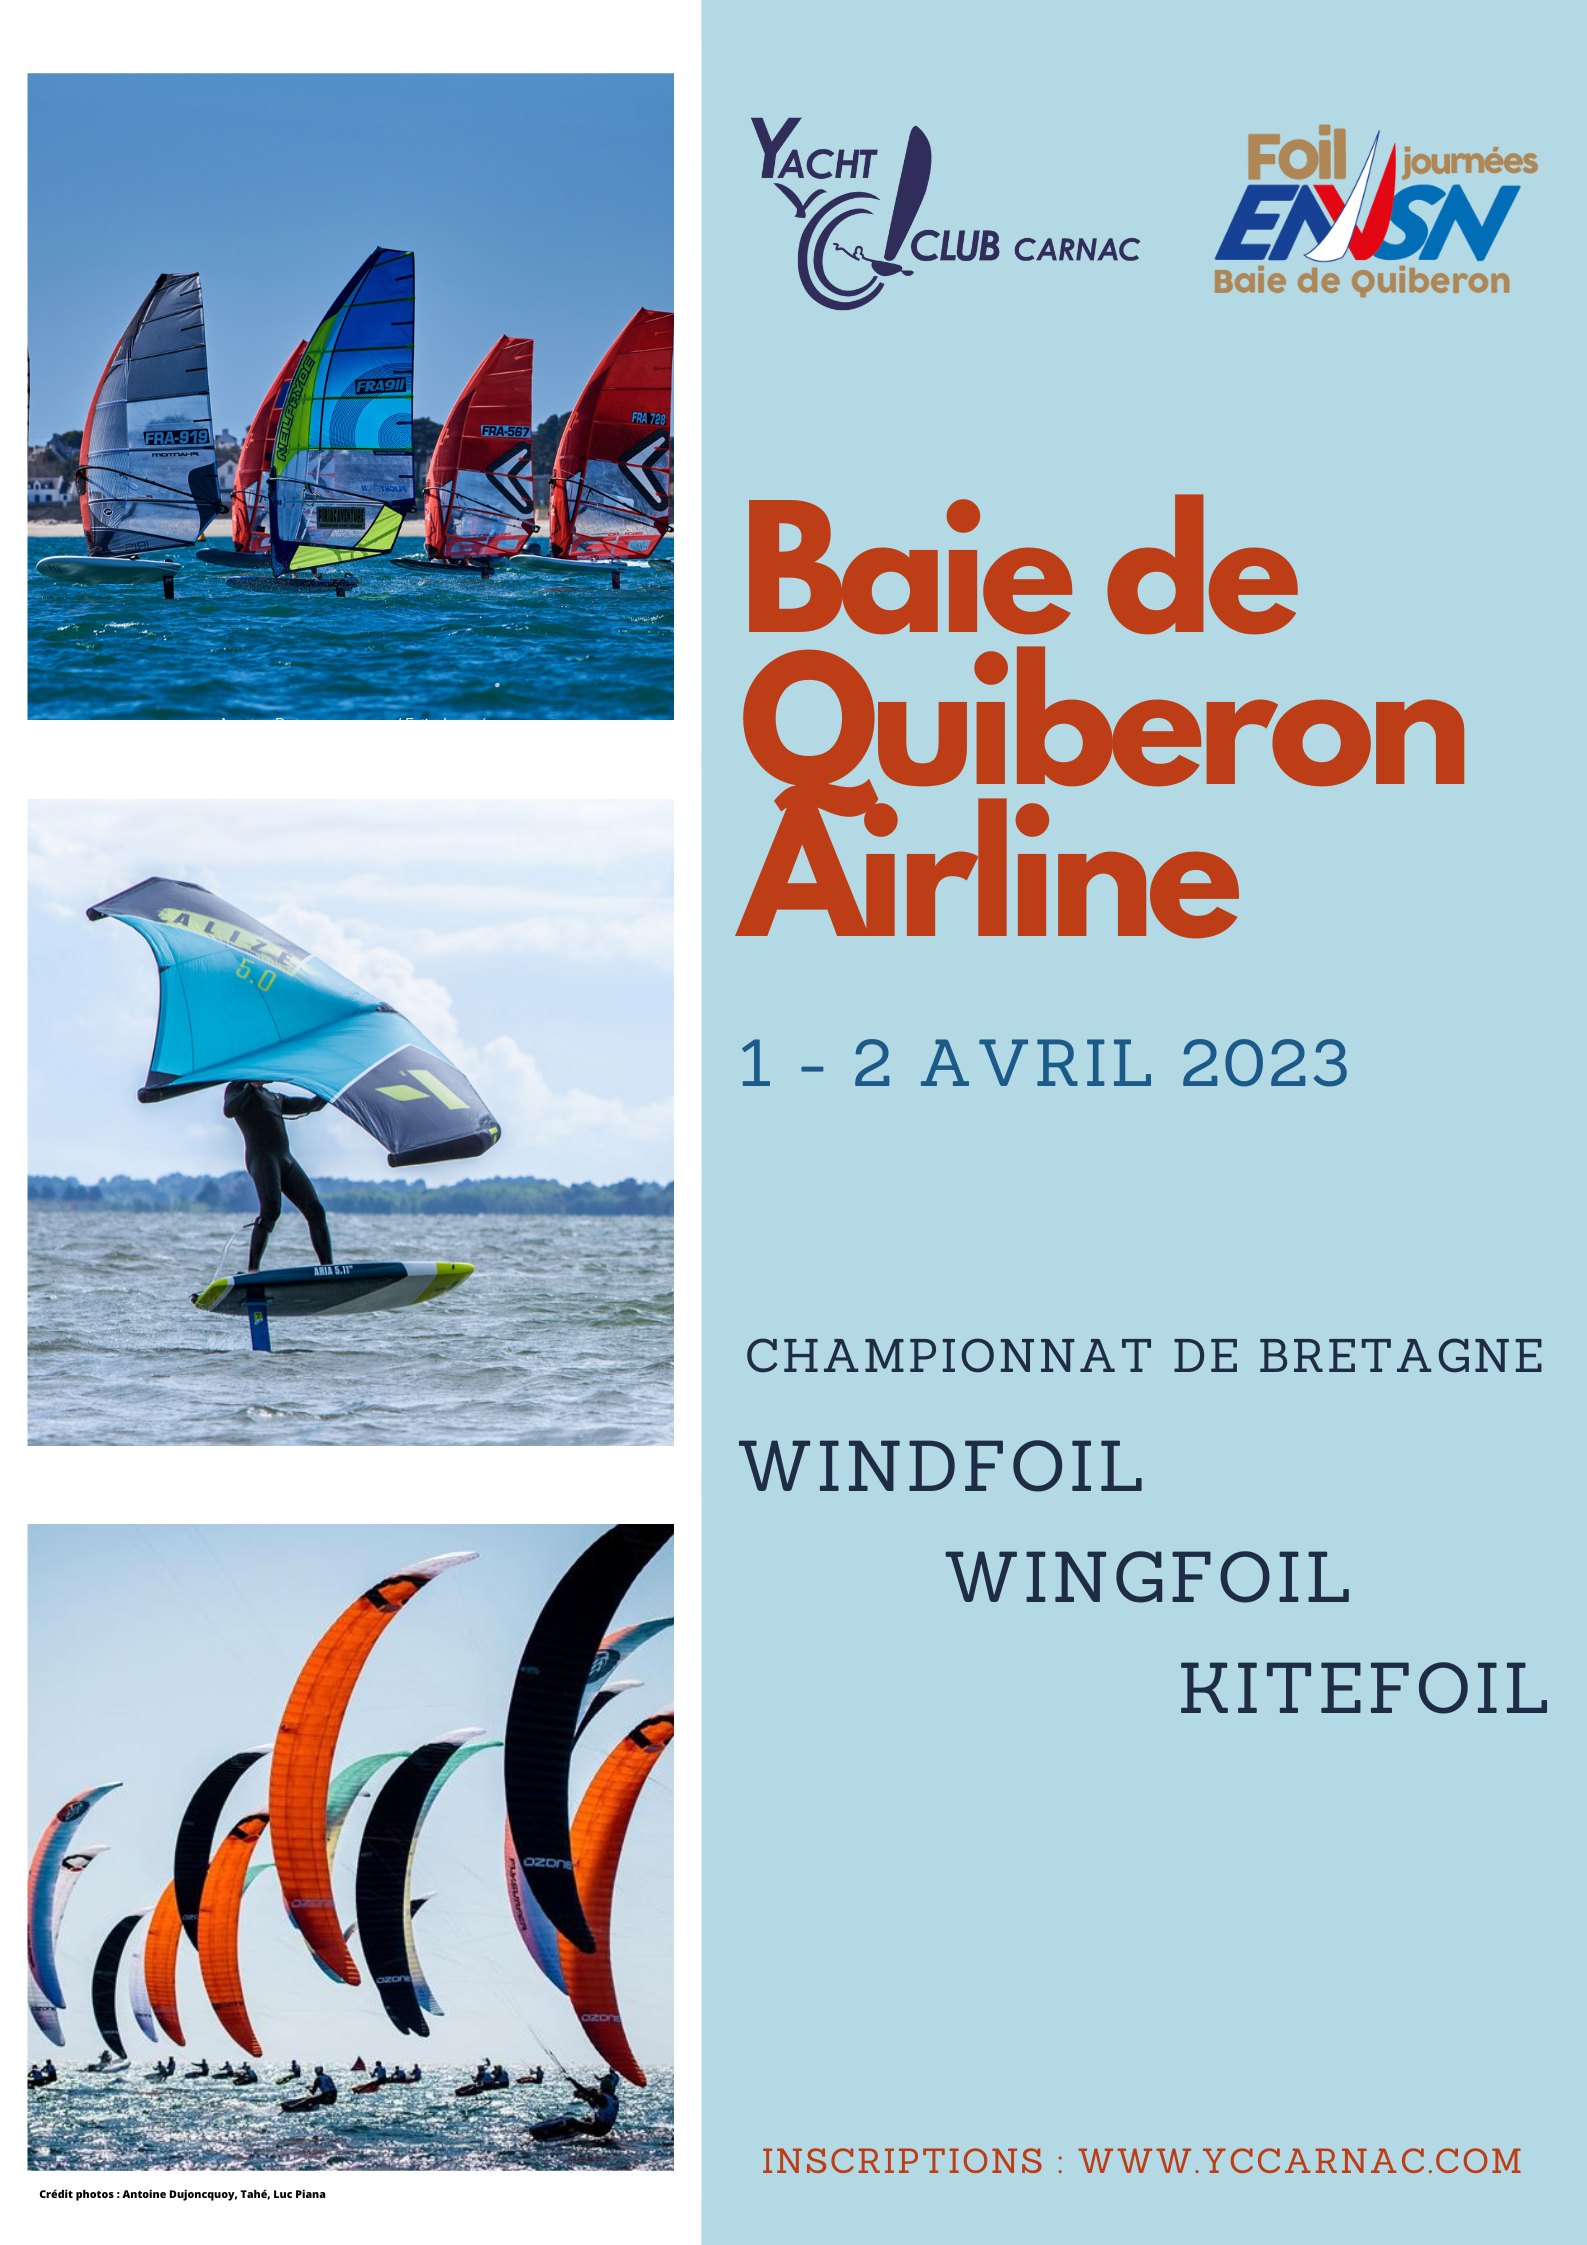 Baie de Quiberon Airline